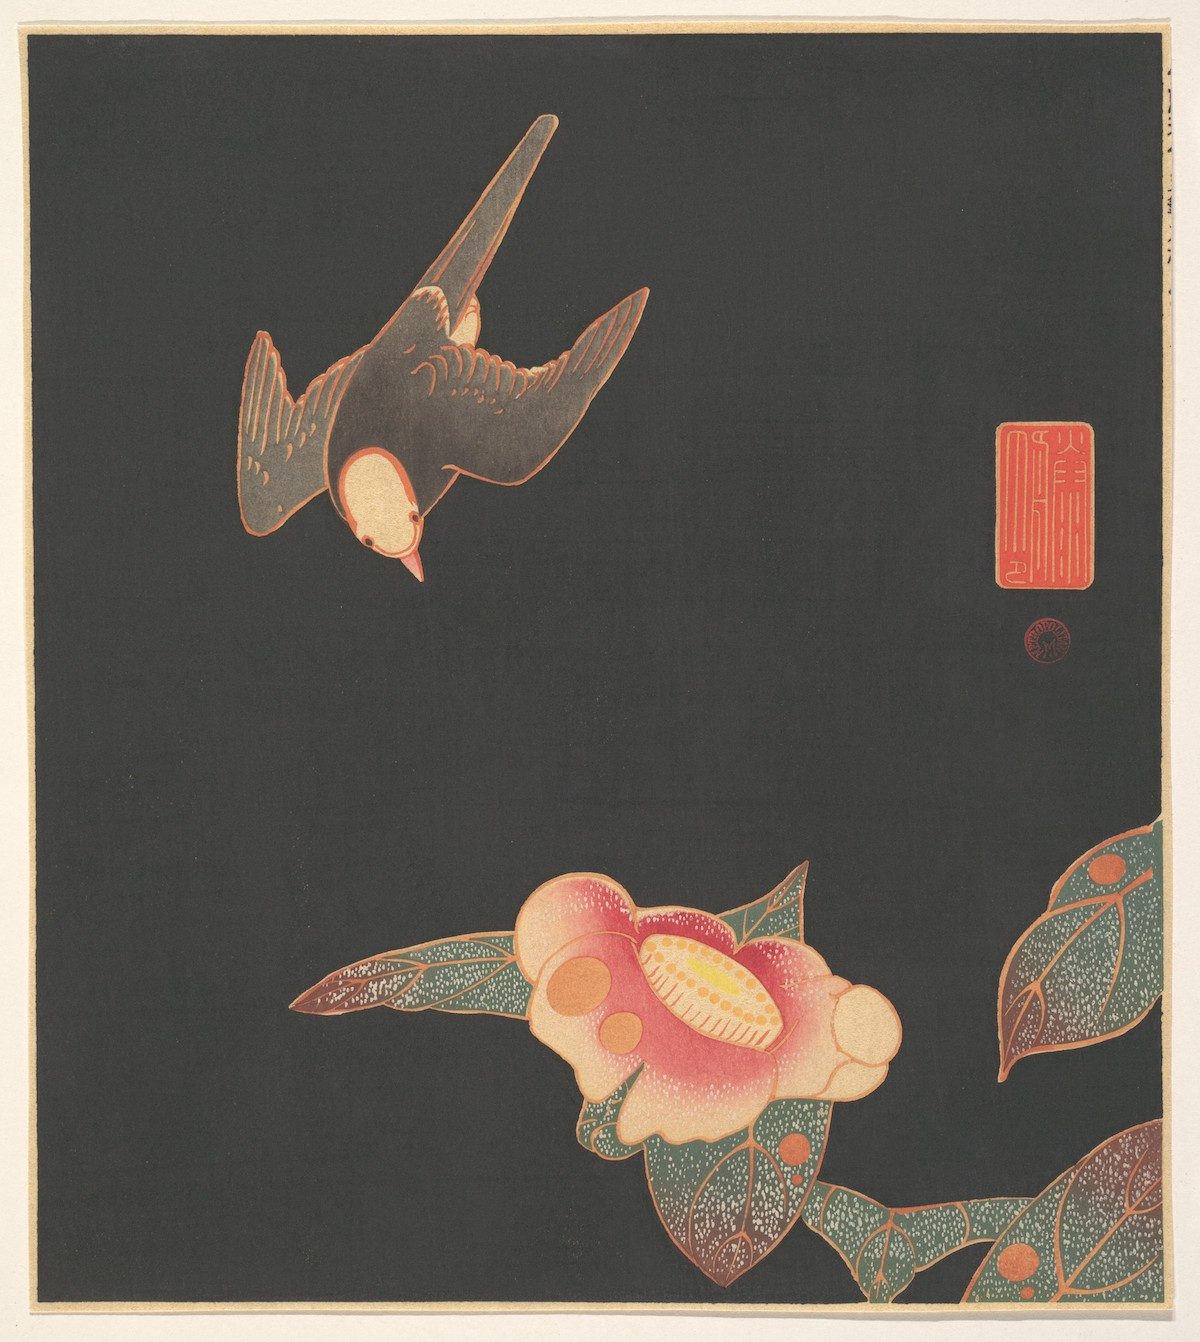 Swallow and Camellia (ca. 1900) illustration by Ito Jakuchu.